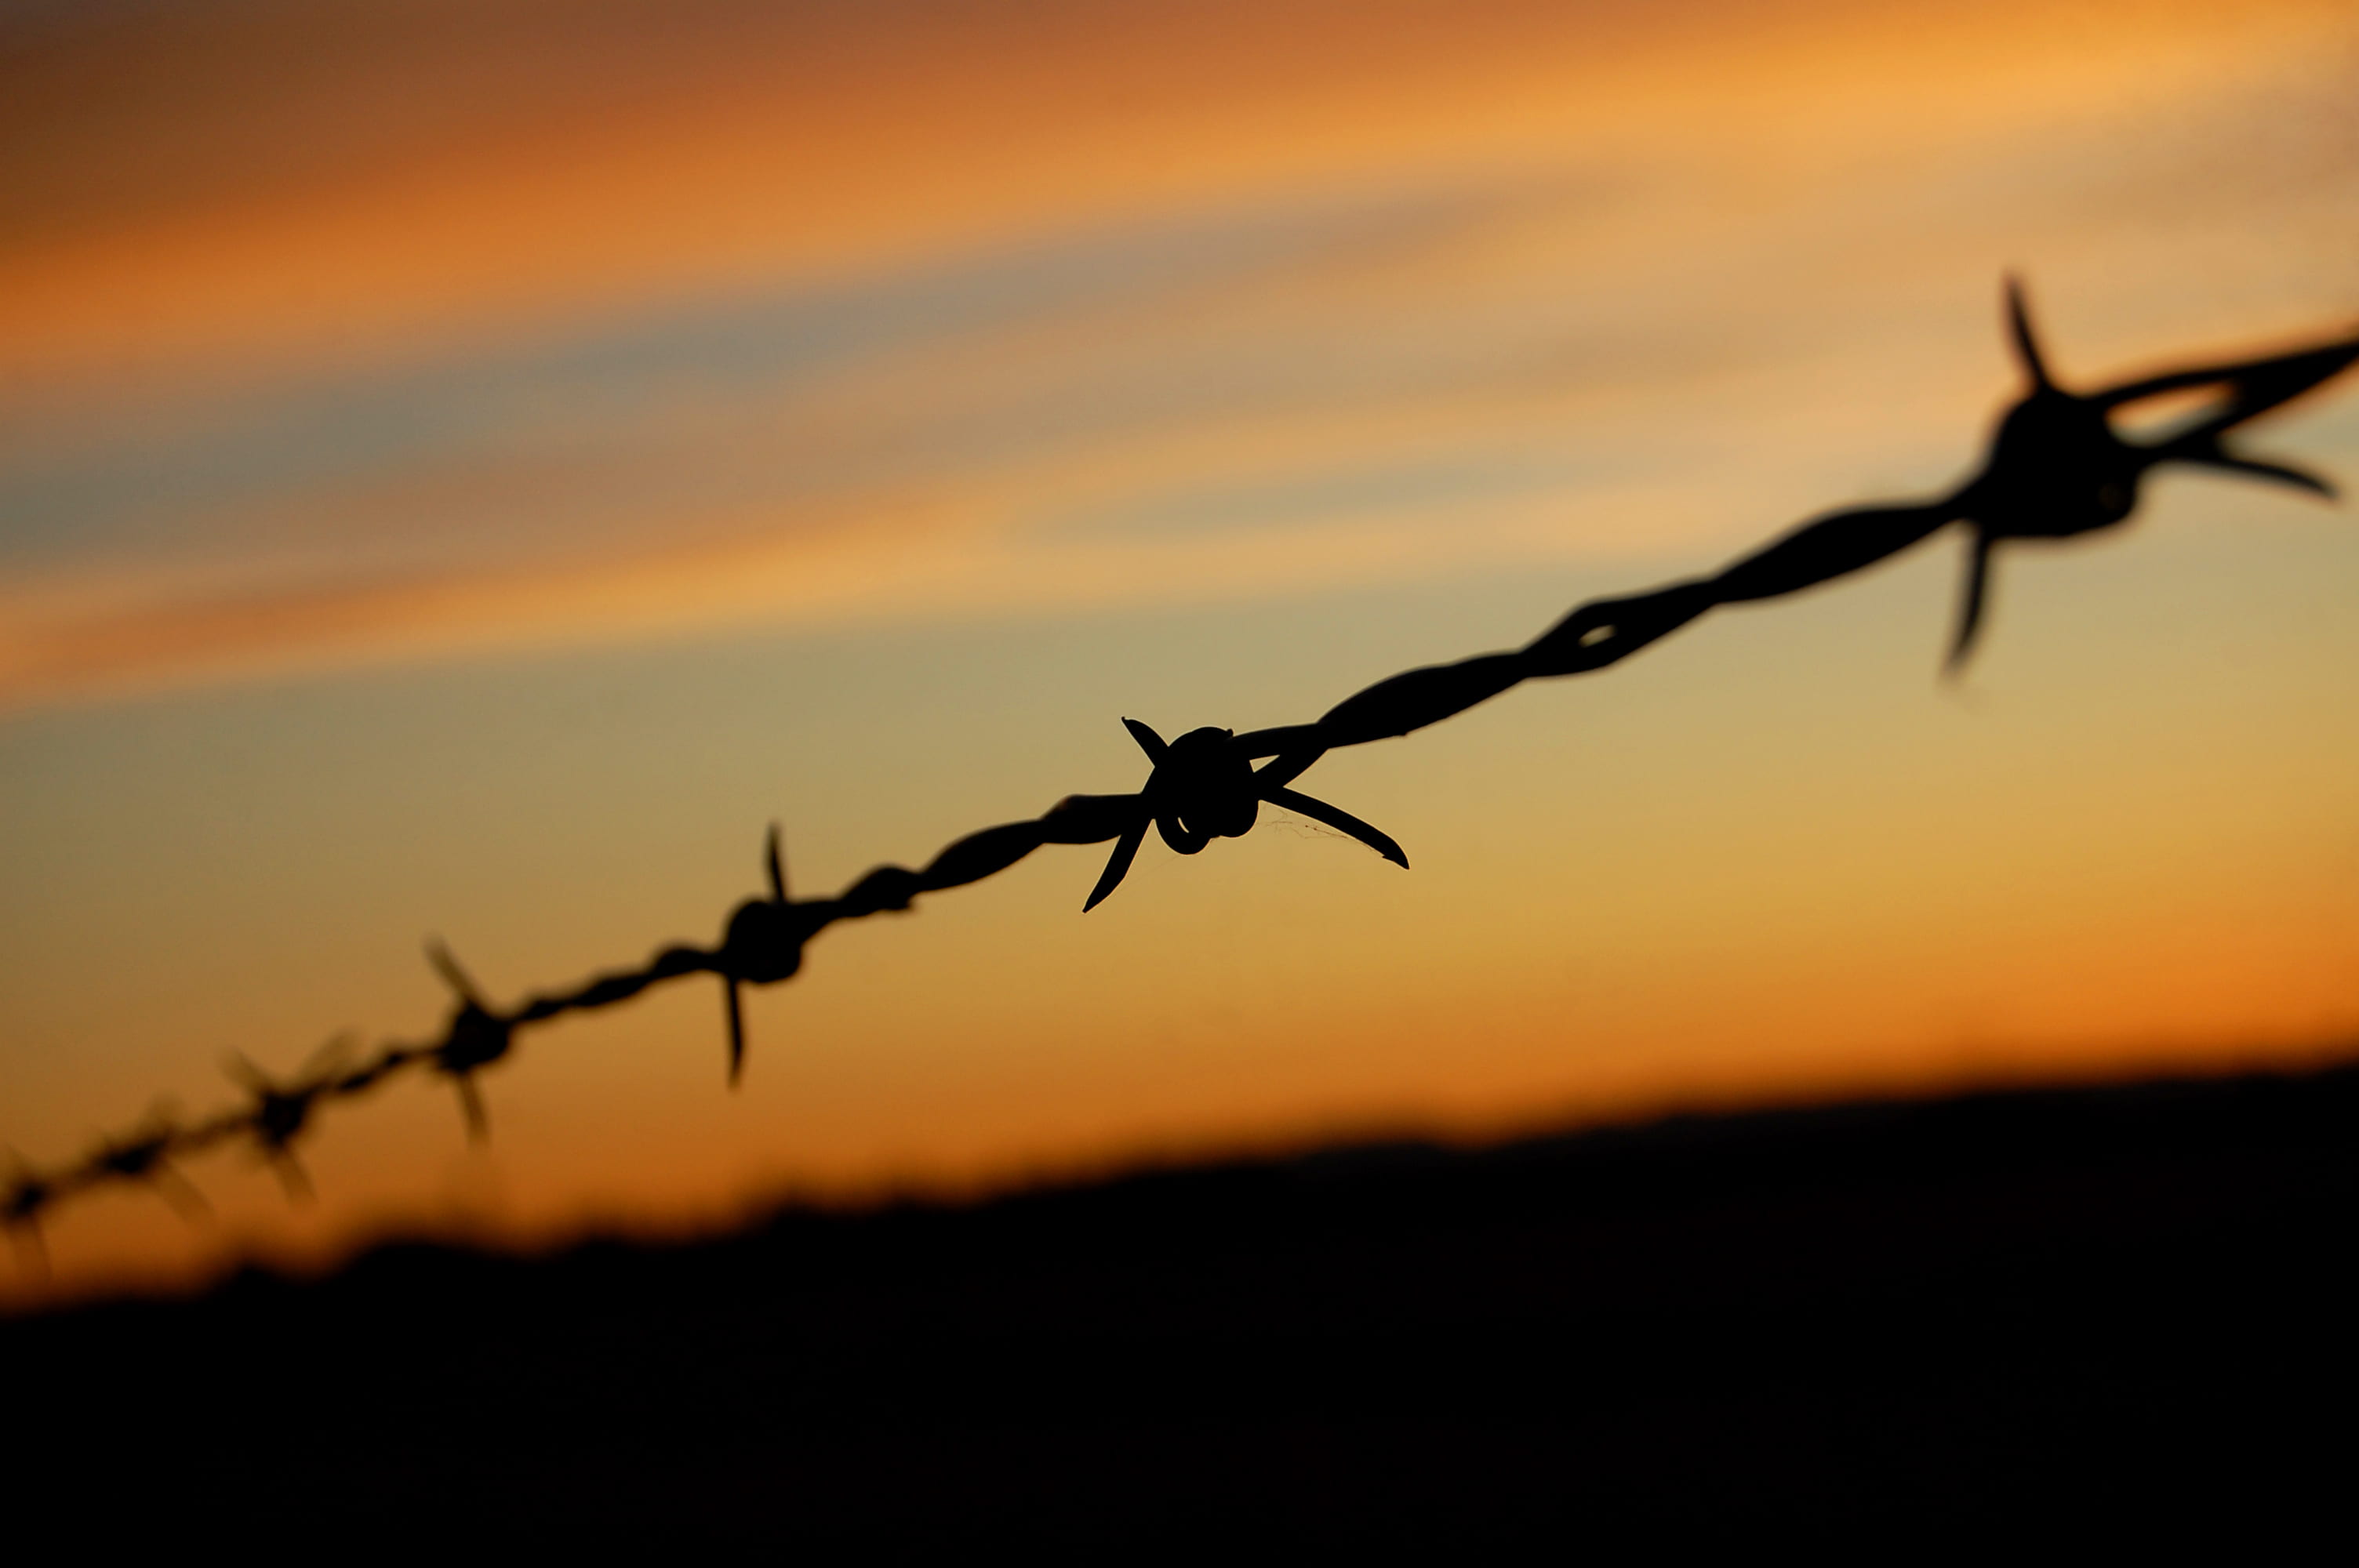 Barbwire fence. Source: Edmund Garman, Creative Commons